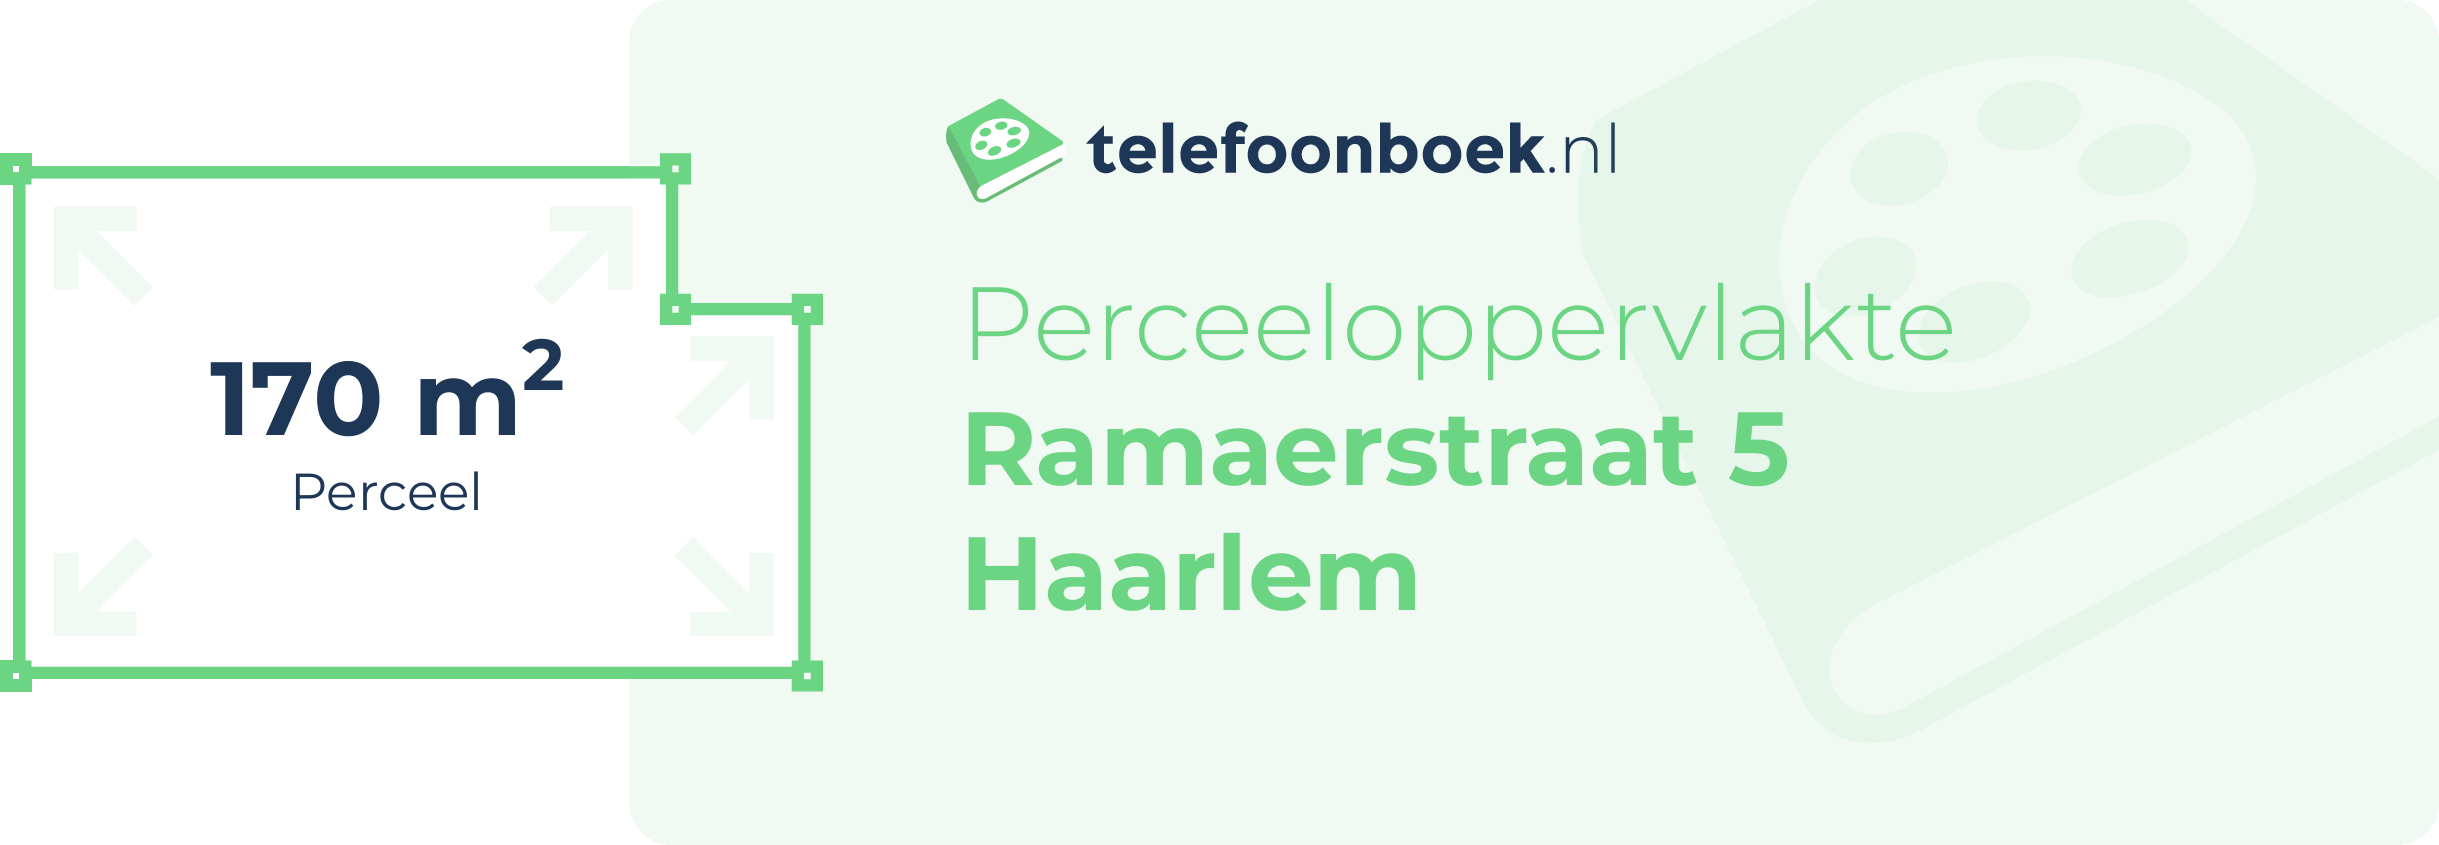 Perceeloppervlakte Ramaerstraat 5 Haarlem